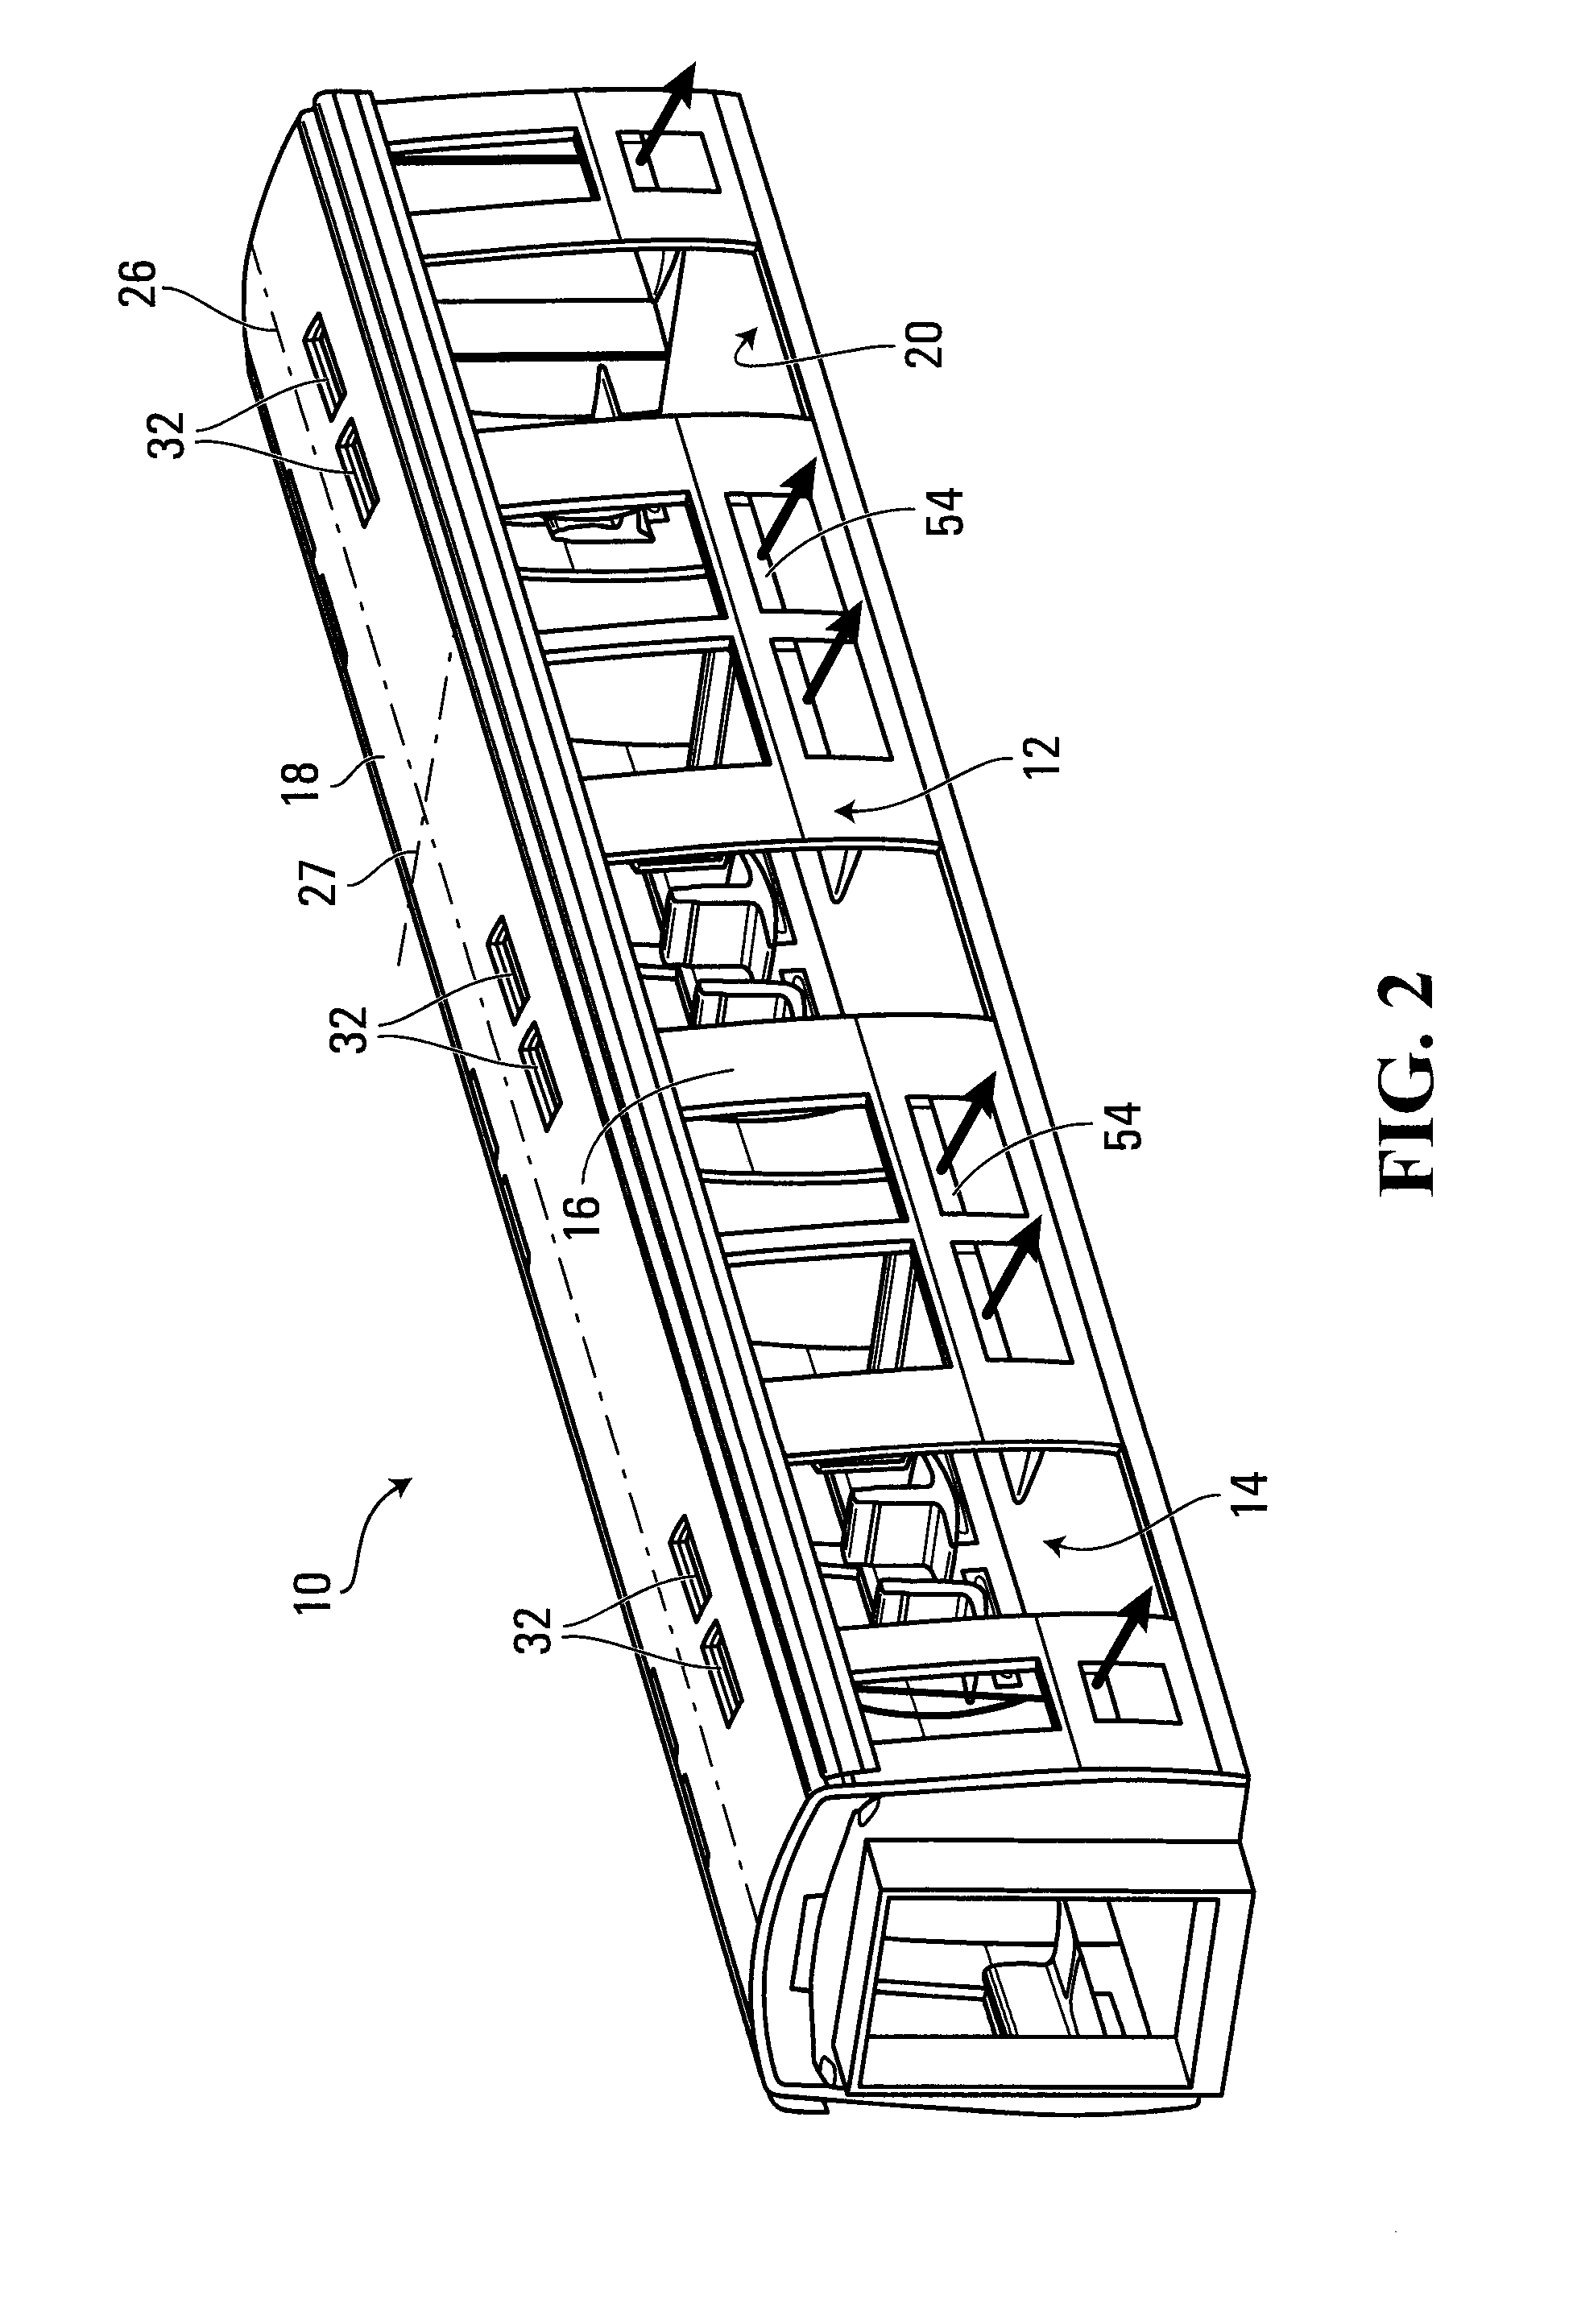 Ventilation System for a Passenger Transit Vehicle